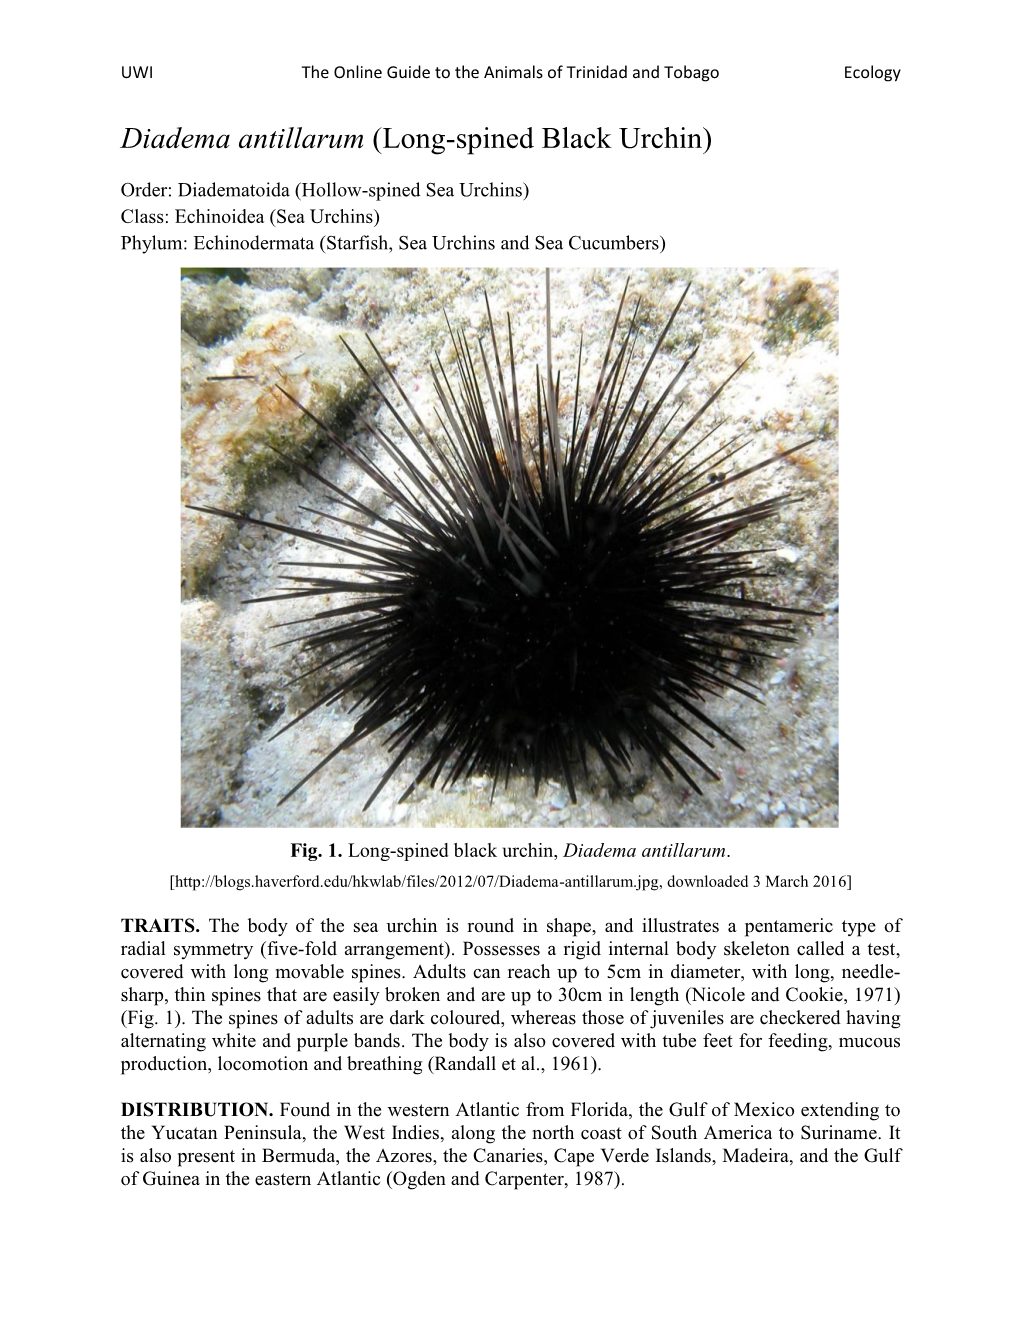 Diadema Antillarum (Long-Spined Black Urchin)